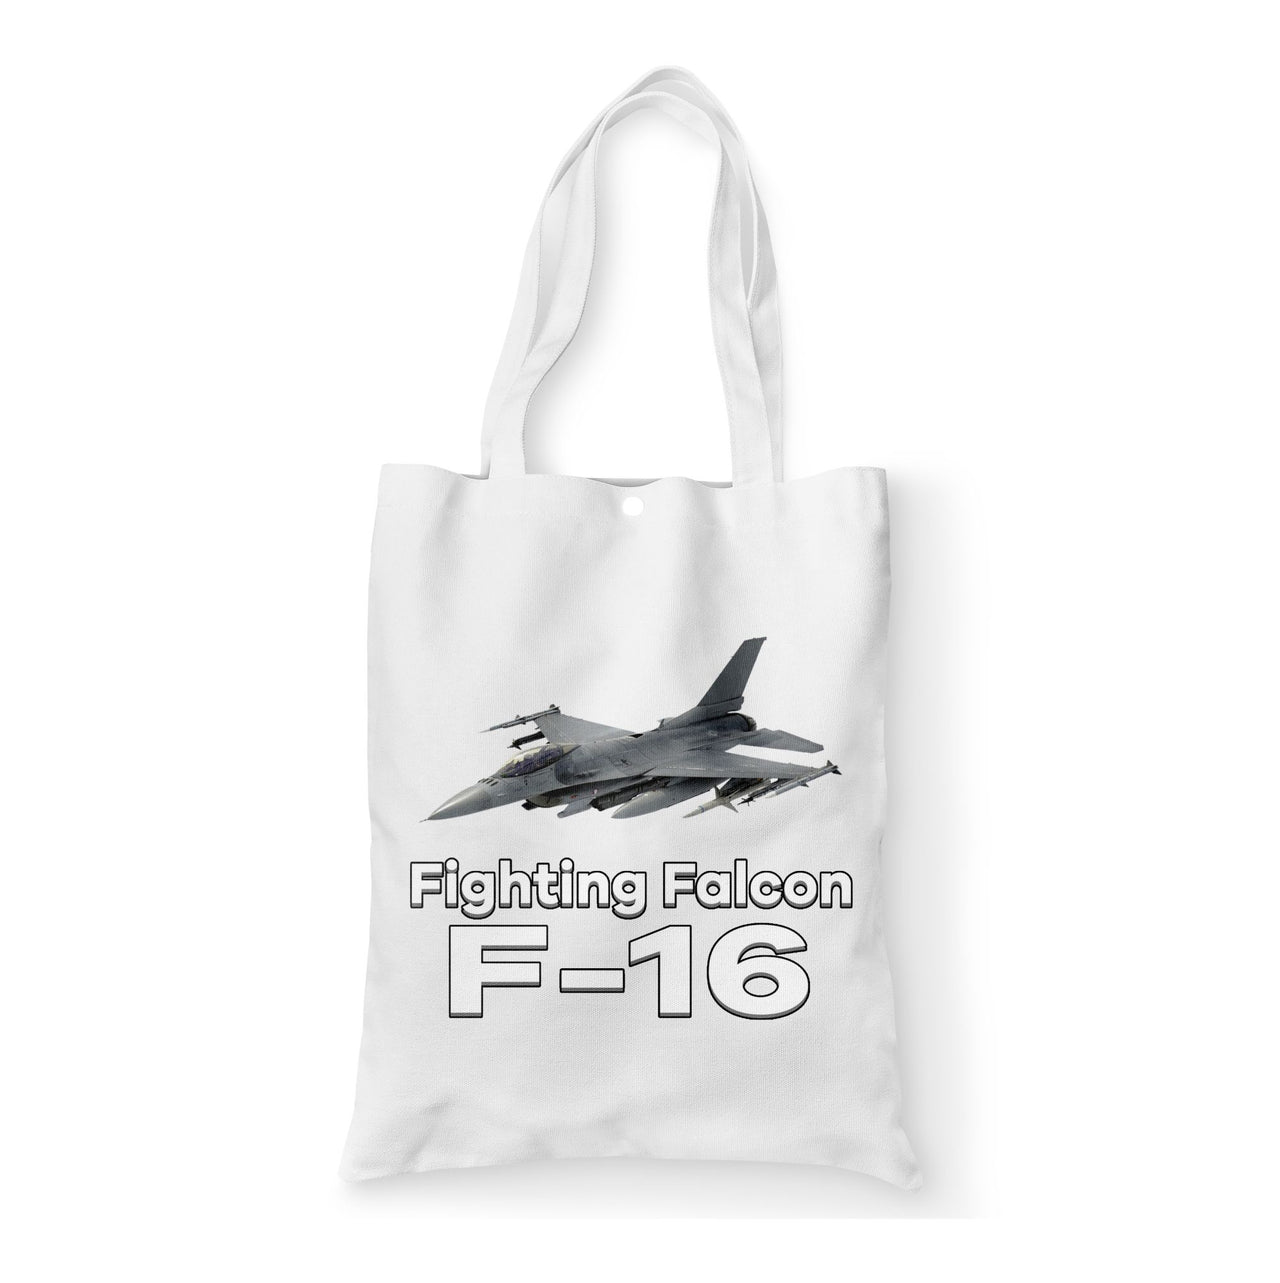 The Fighting Falcon F16 Designed Tote Bags